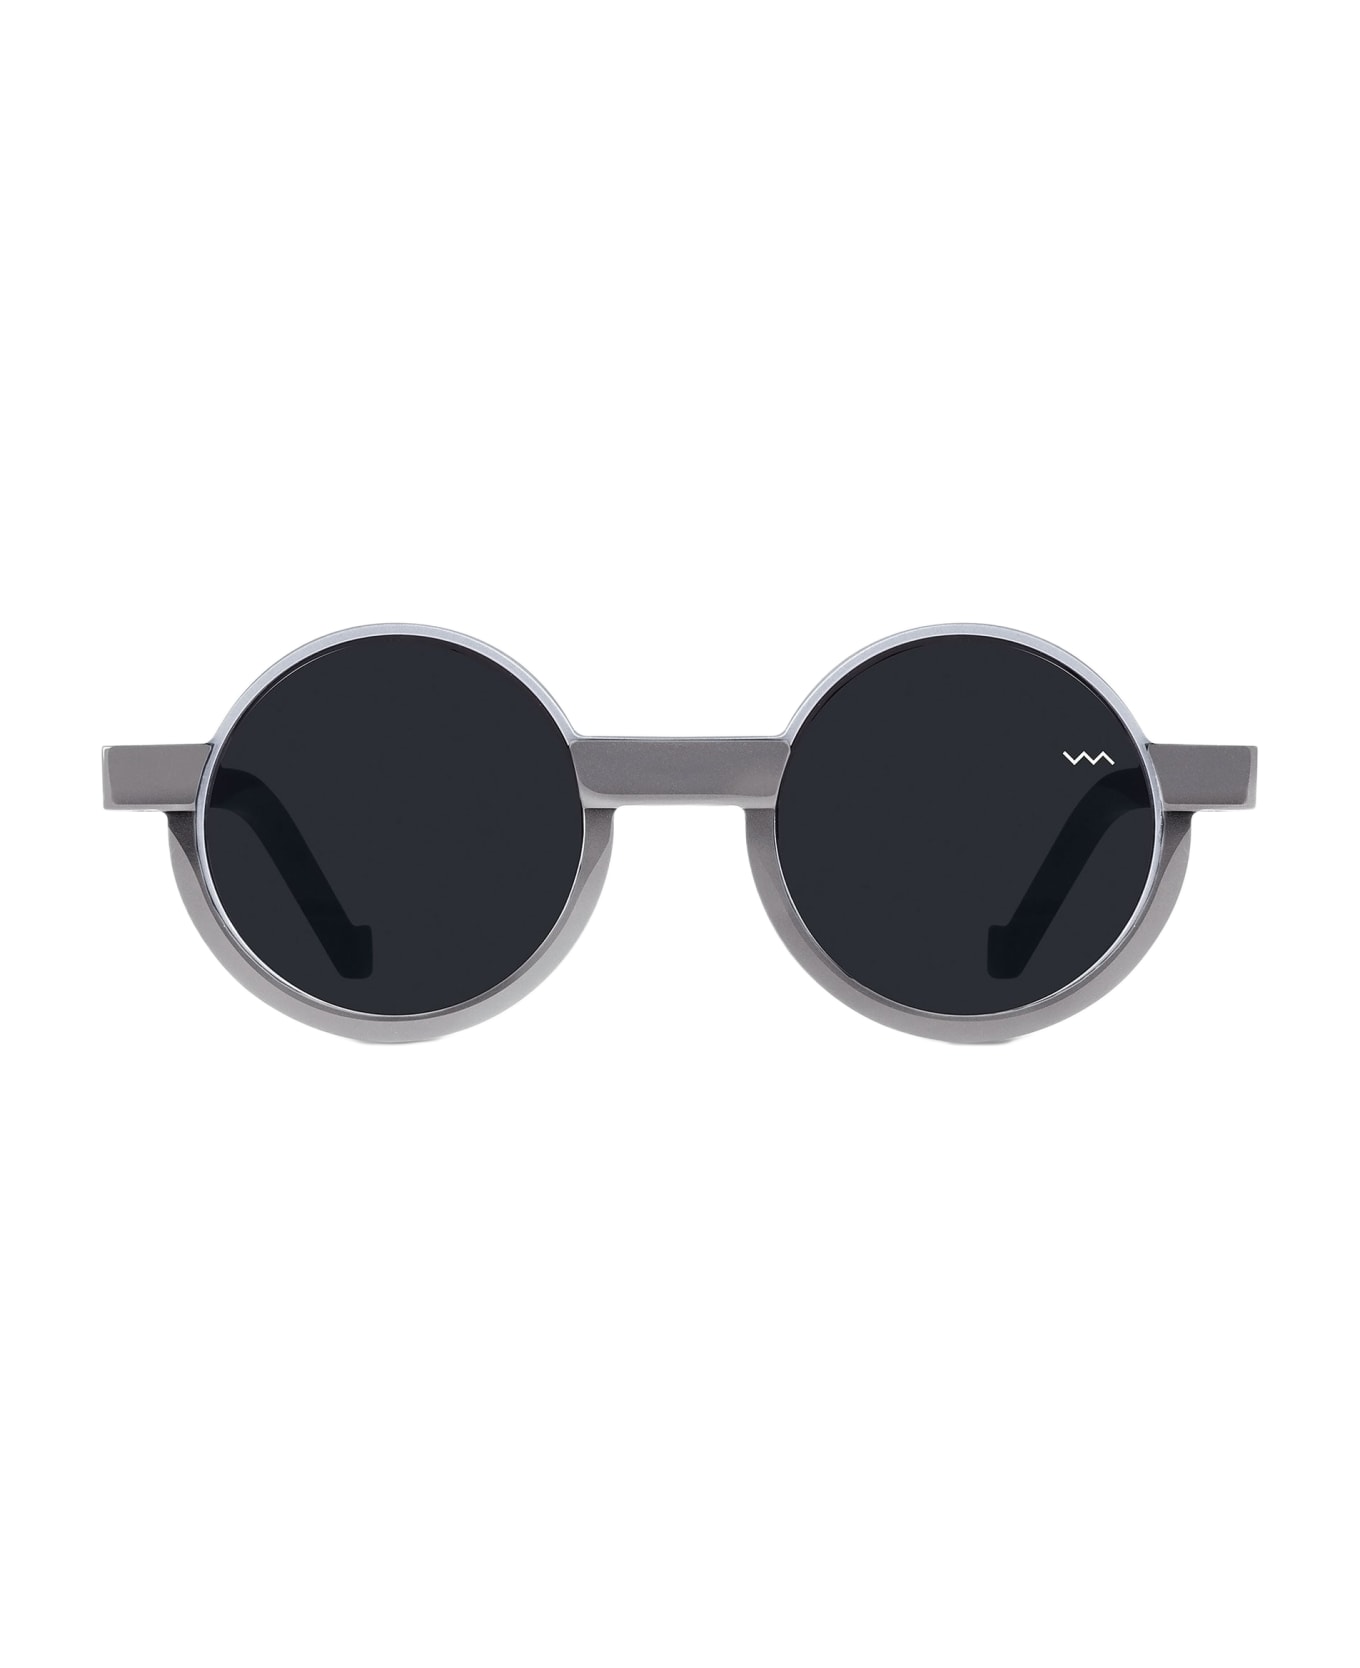 VAVA Cl0011 - Light Grey Sunglasses - light grey